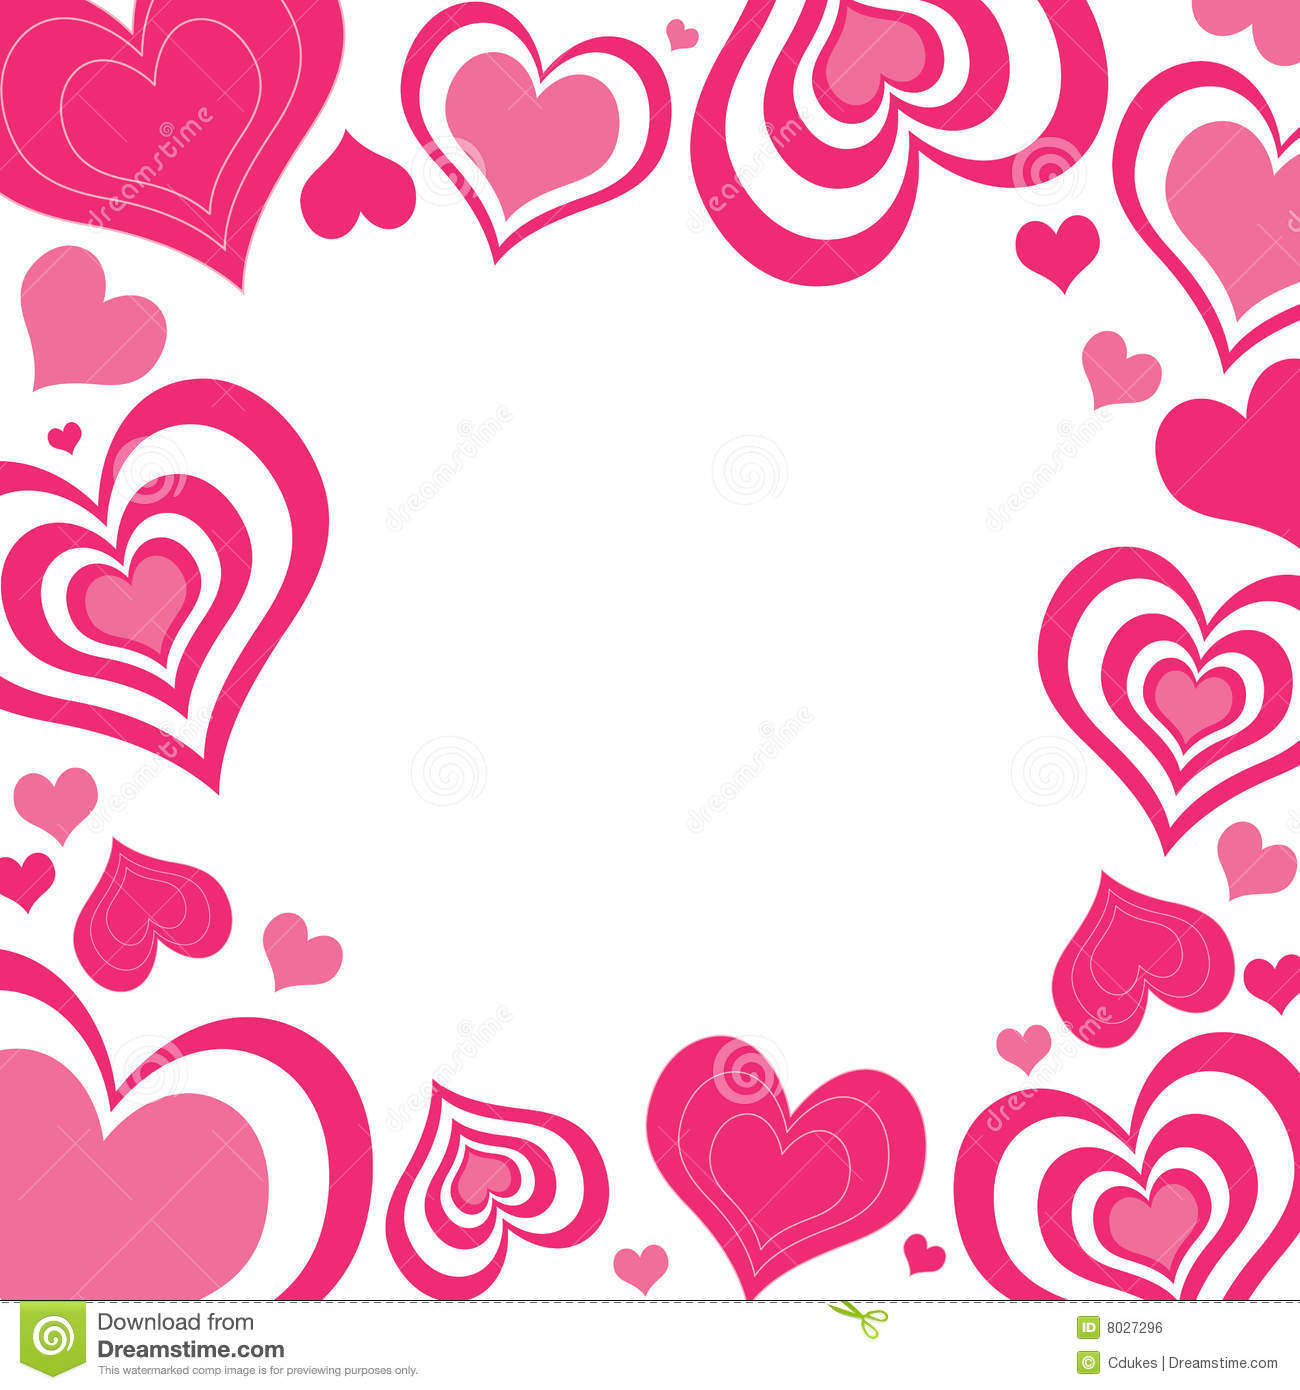 Valentine Hearts Border Royalty Free Stock Image   Image  8027296